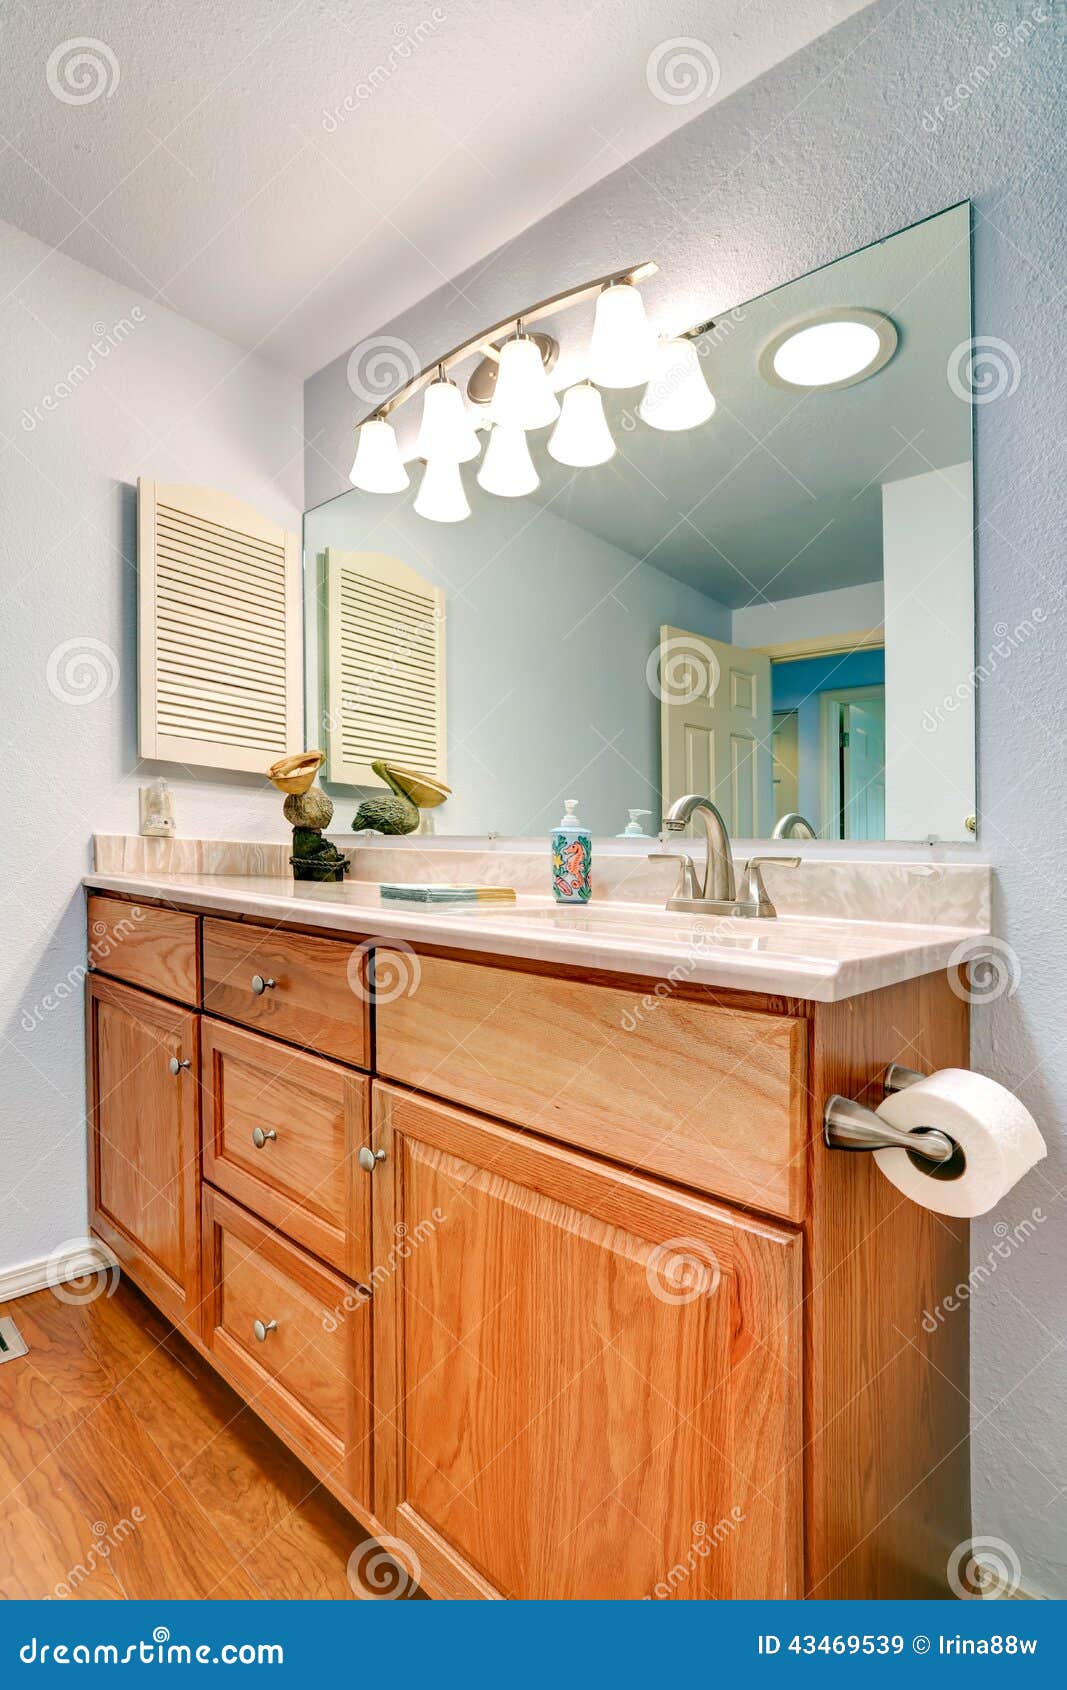 bathroom vanity cabinet